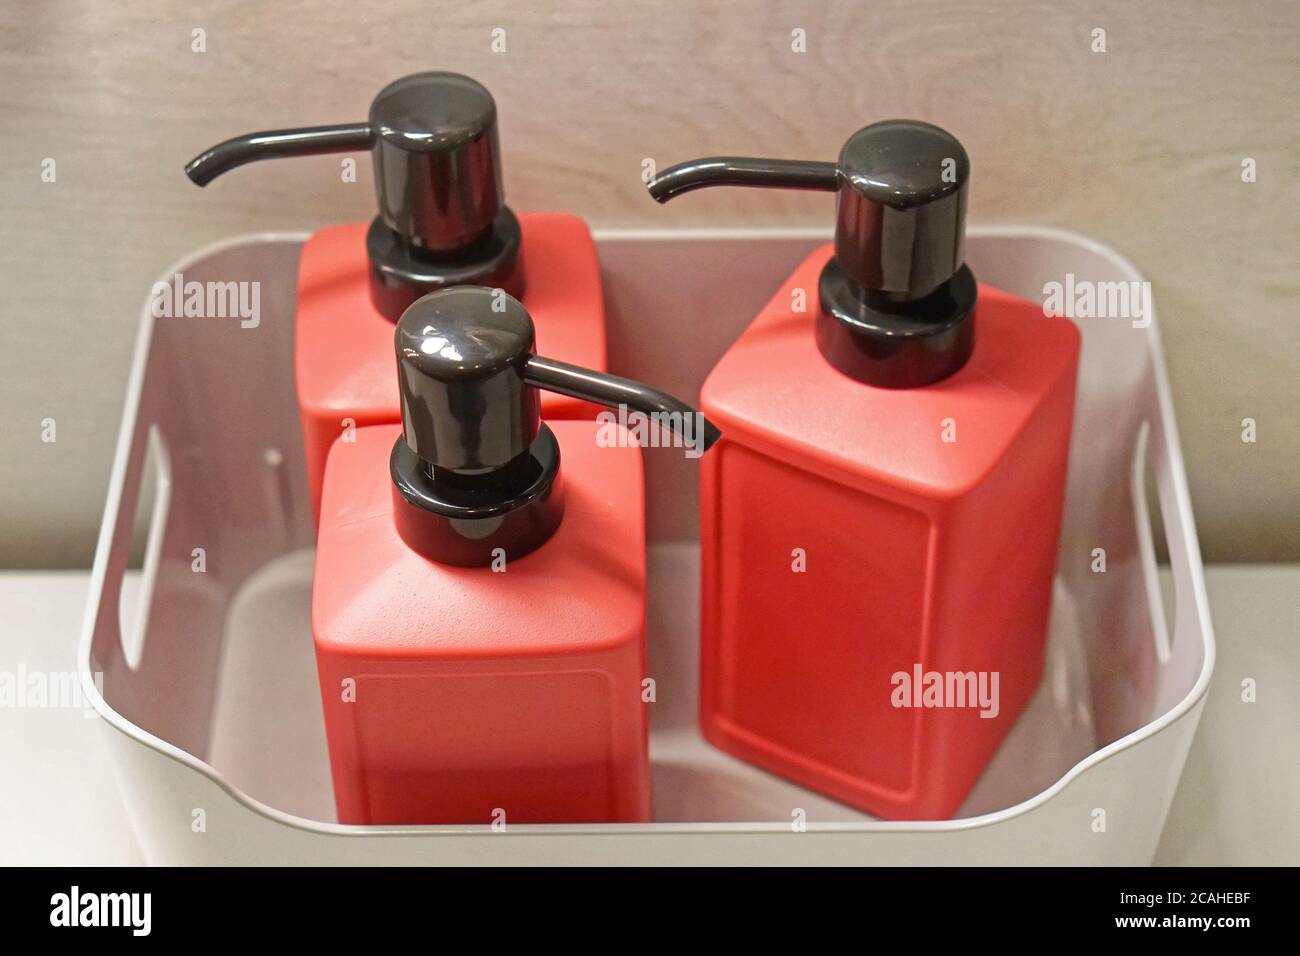 Dispensadores de jabón fotografías e imágenes de alta resolución - Alamy